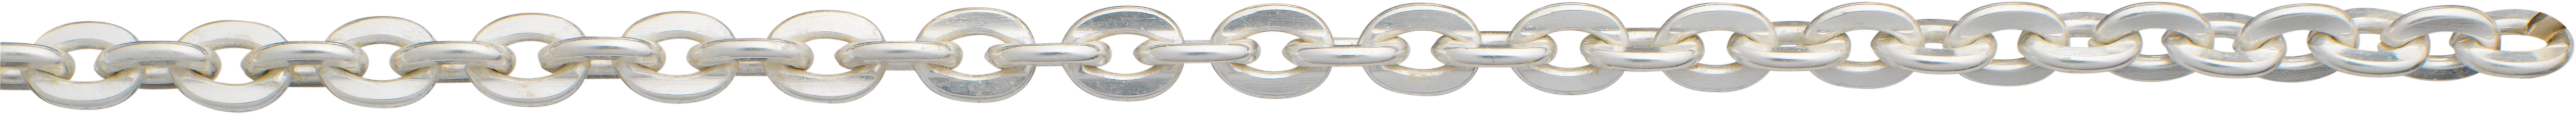 ankerketting plat gewalst zilver 925/- 3,80mm, draad dikte 0,80mm